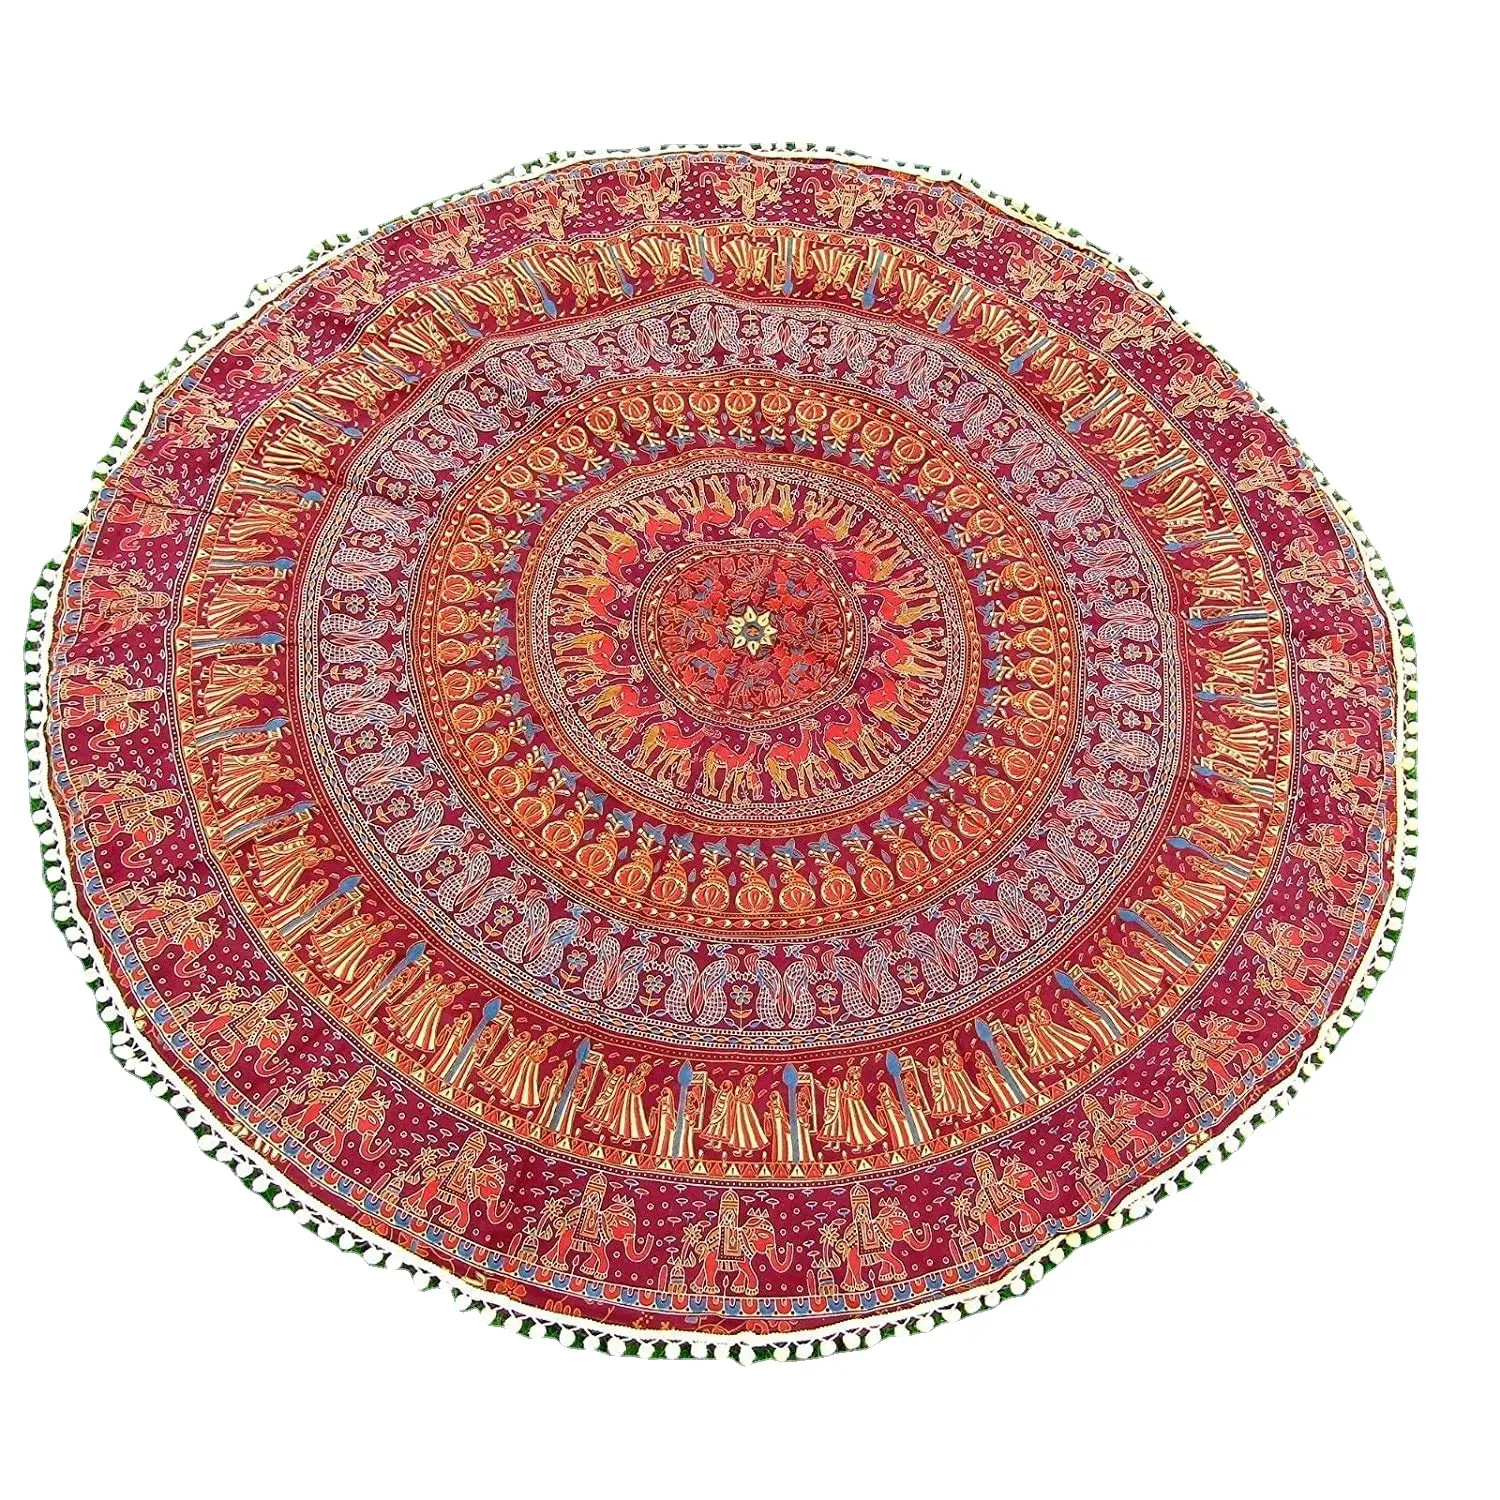 Indian Mandala Round Tapestry Beach Throw Yoga Mat Table Cover blanket, roundie mandala throw beach towels wholesale